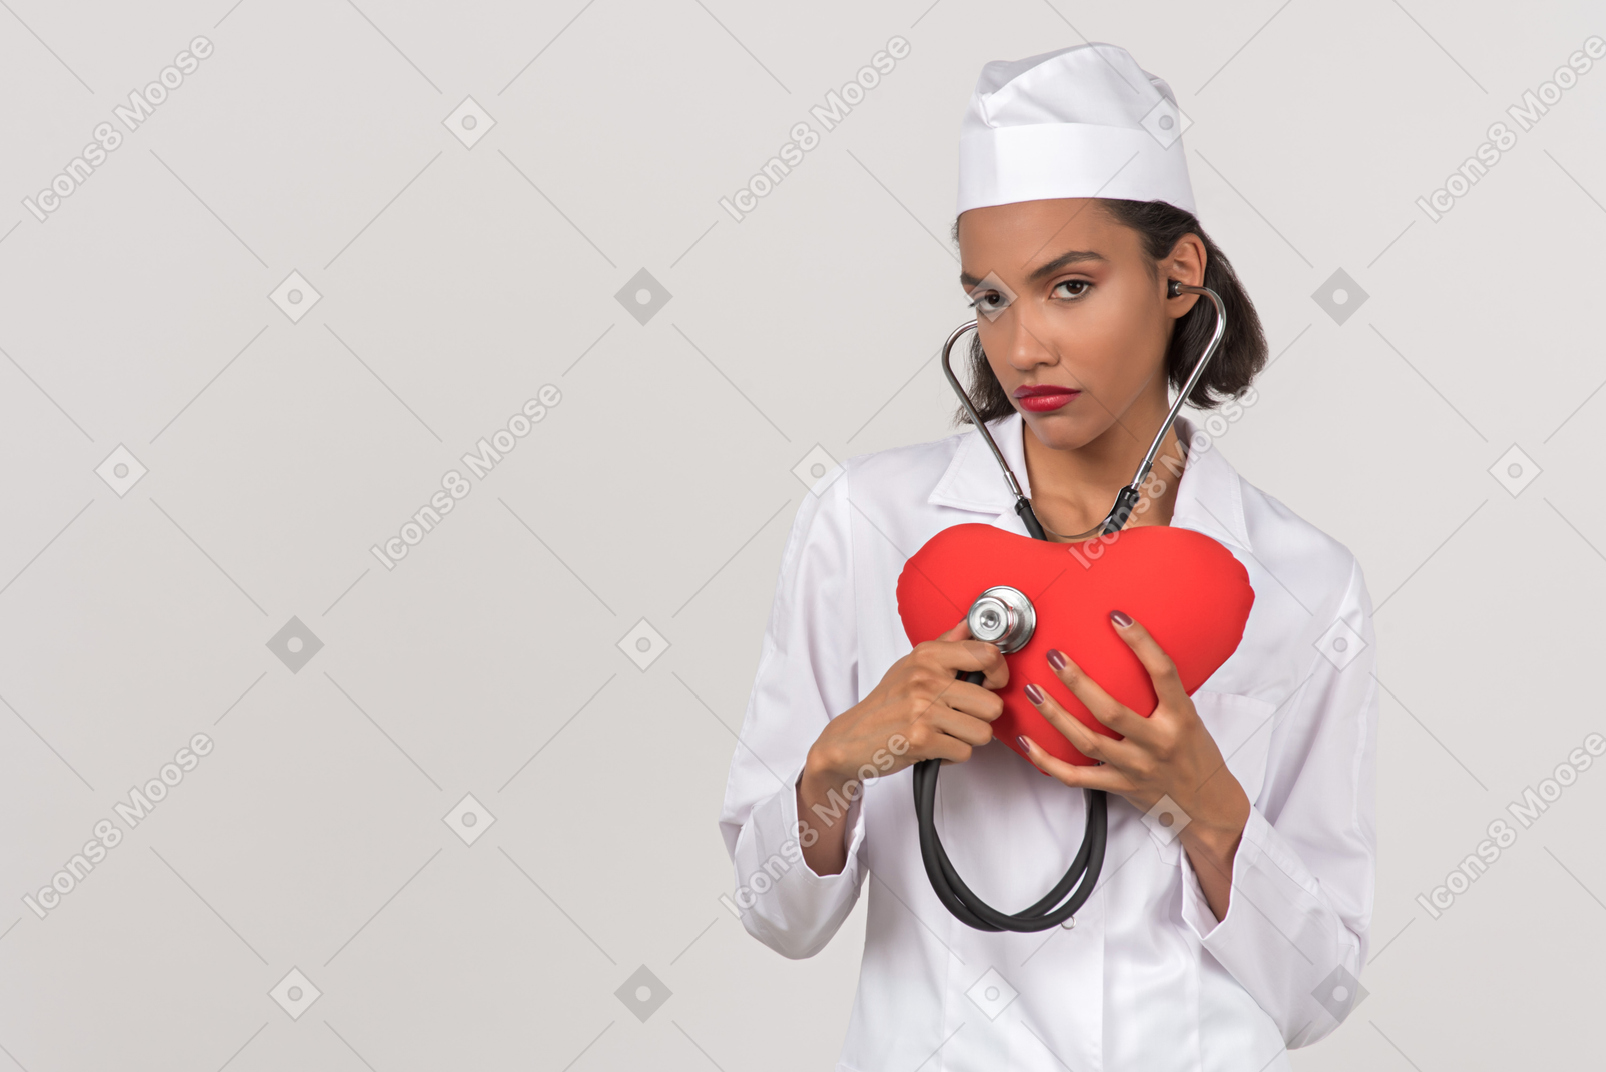 Are you ready for a cardiac examination?